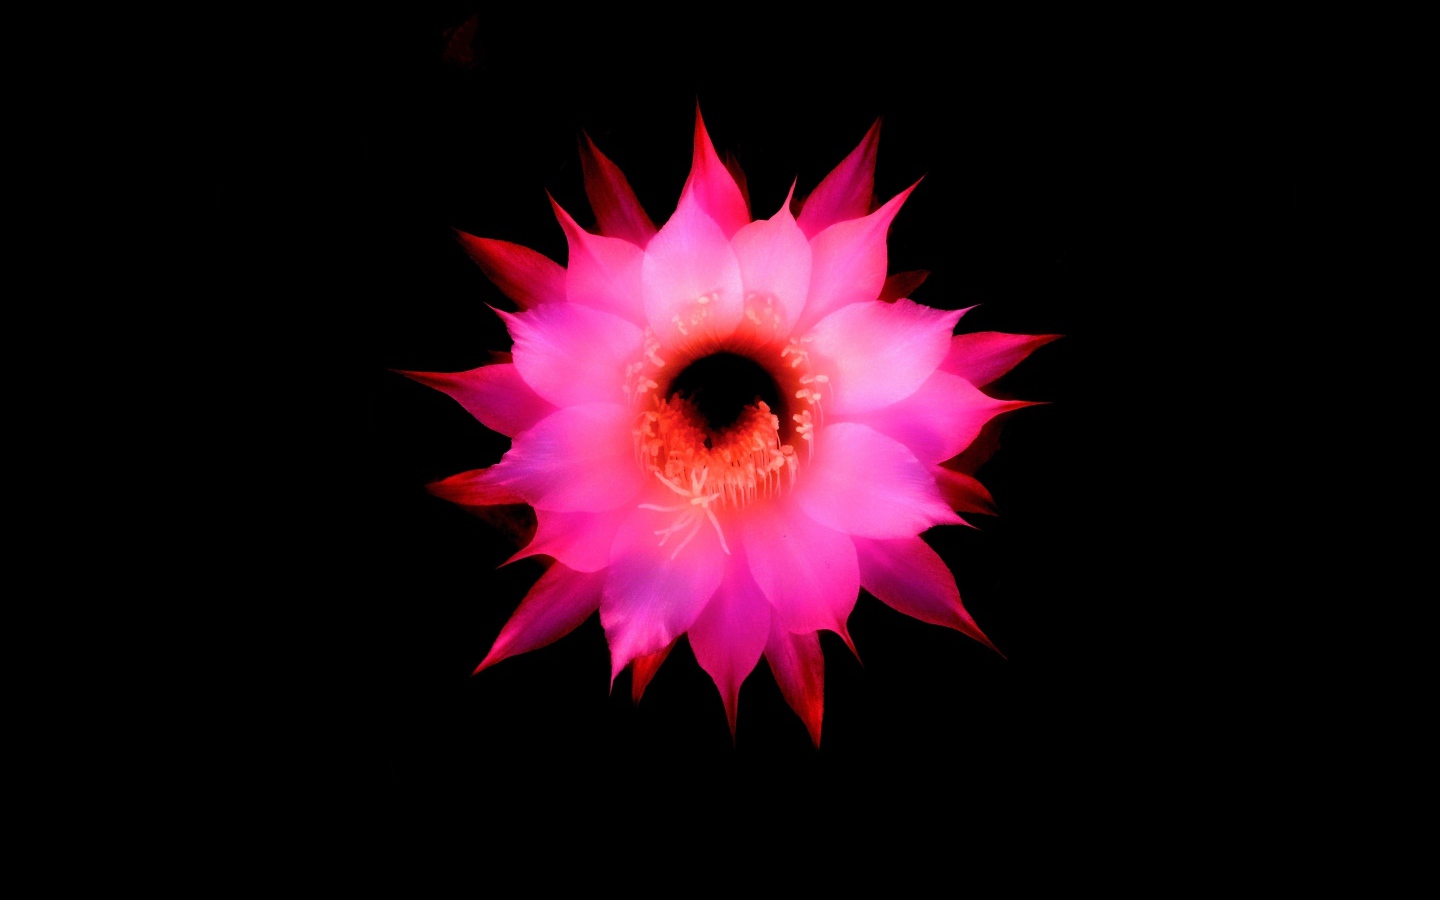 Pink flower on a black background, 3d graphics